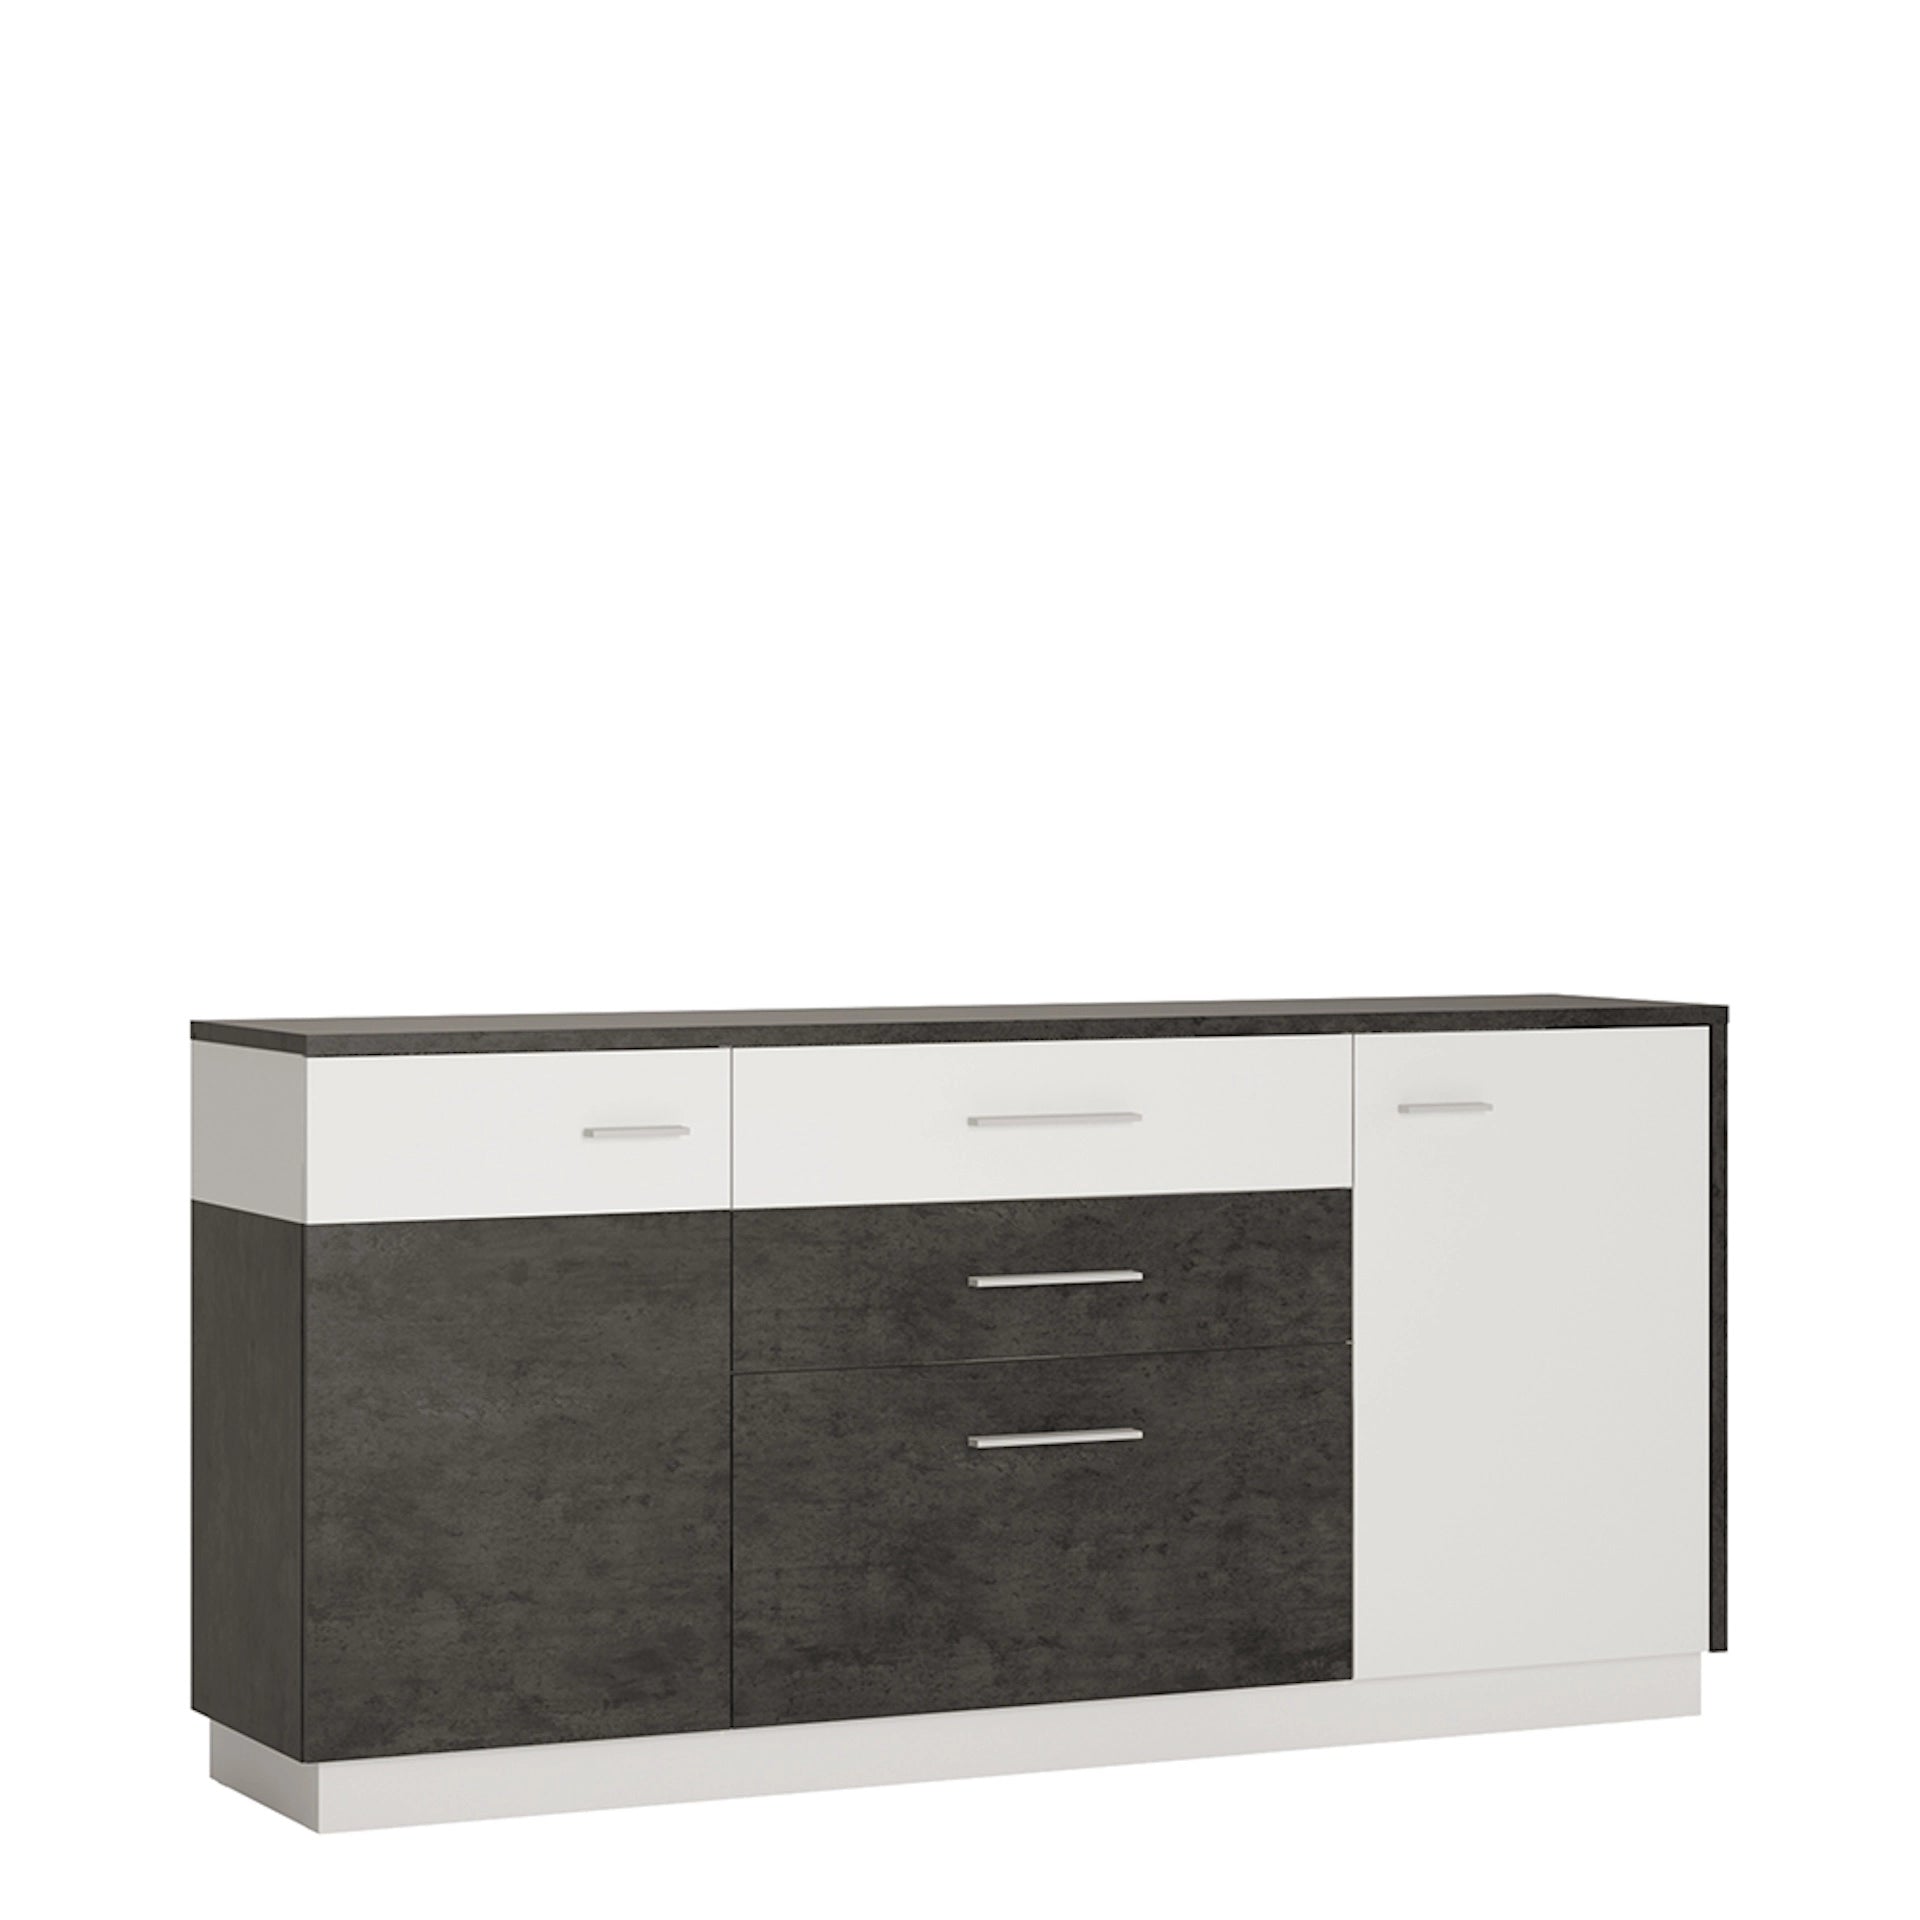 Furniture To Go Zingaro 2 Door 2 Drawer 1 Compartment Sideboard in Grey & White